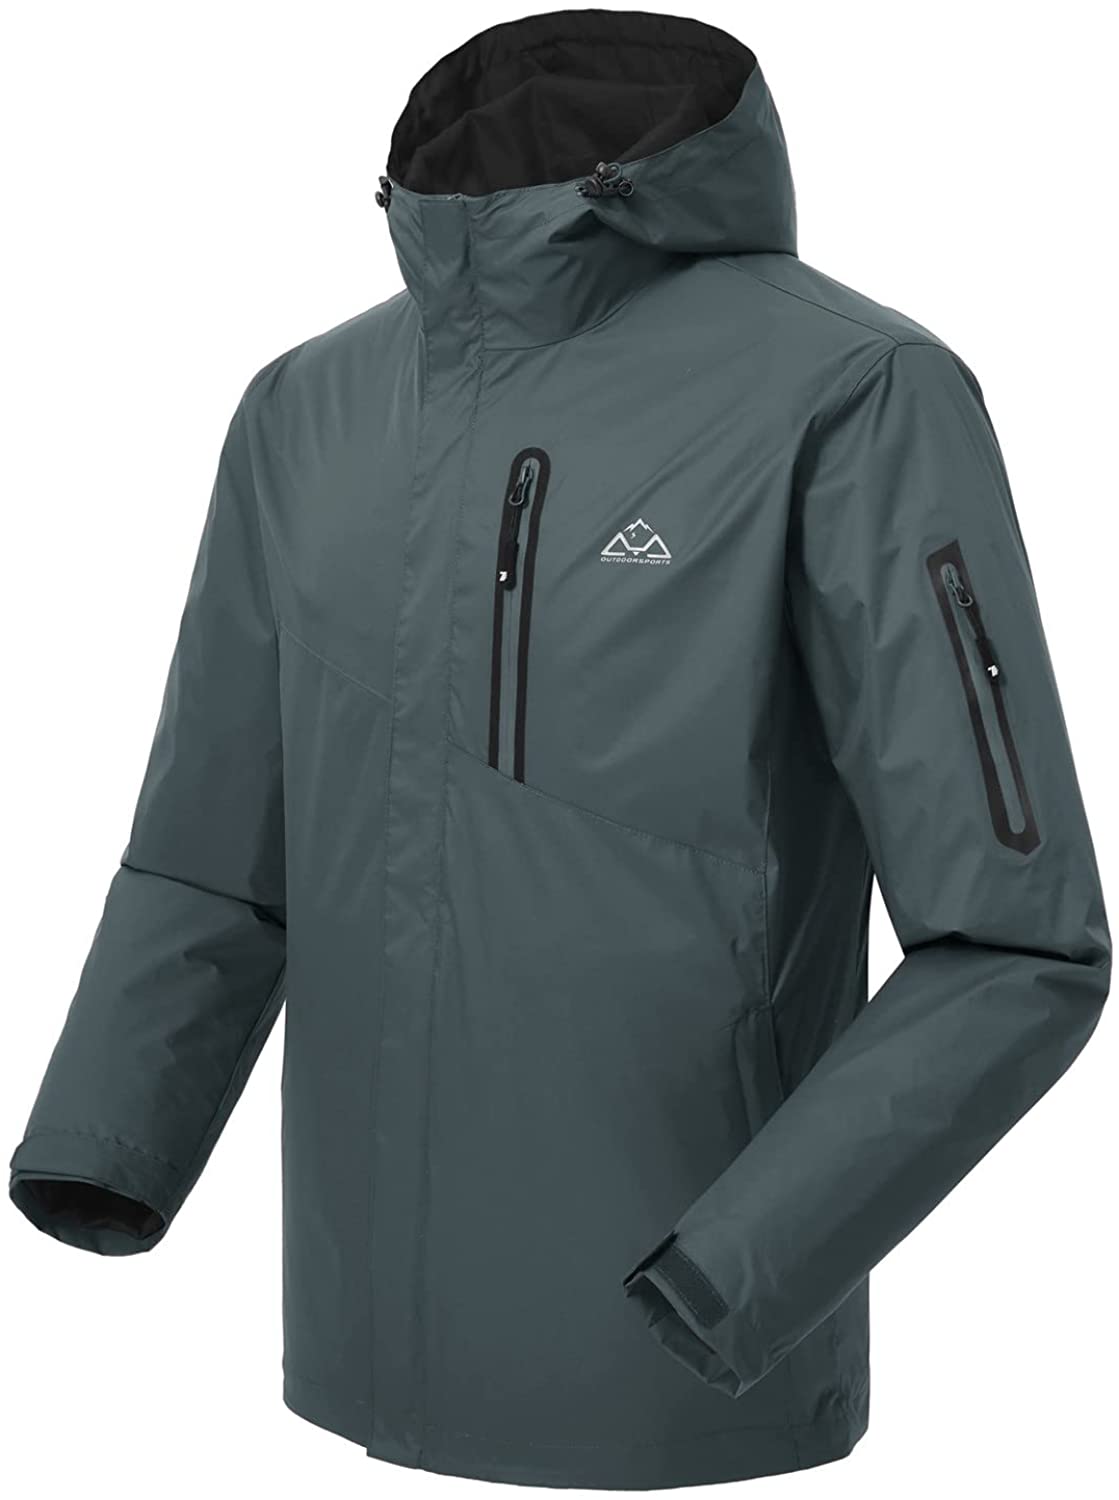 Rdruko Mens Raincoat Waterproof Hooded Hiking Travel Lightweight Windbreaker Army Green, US XL 